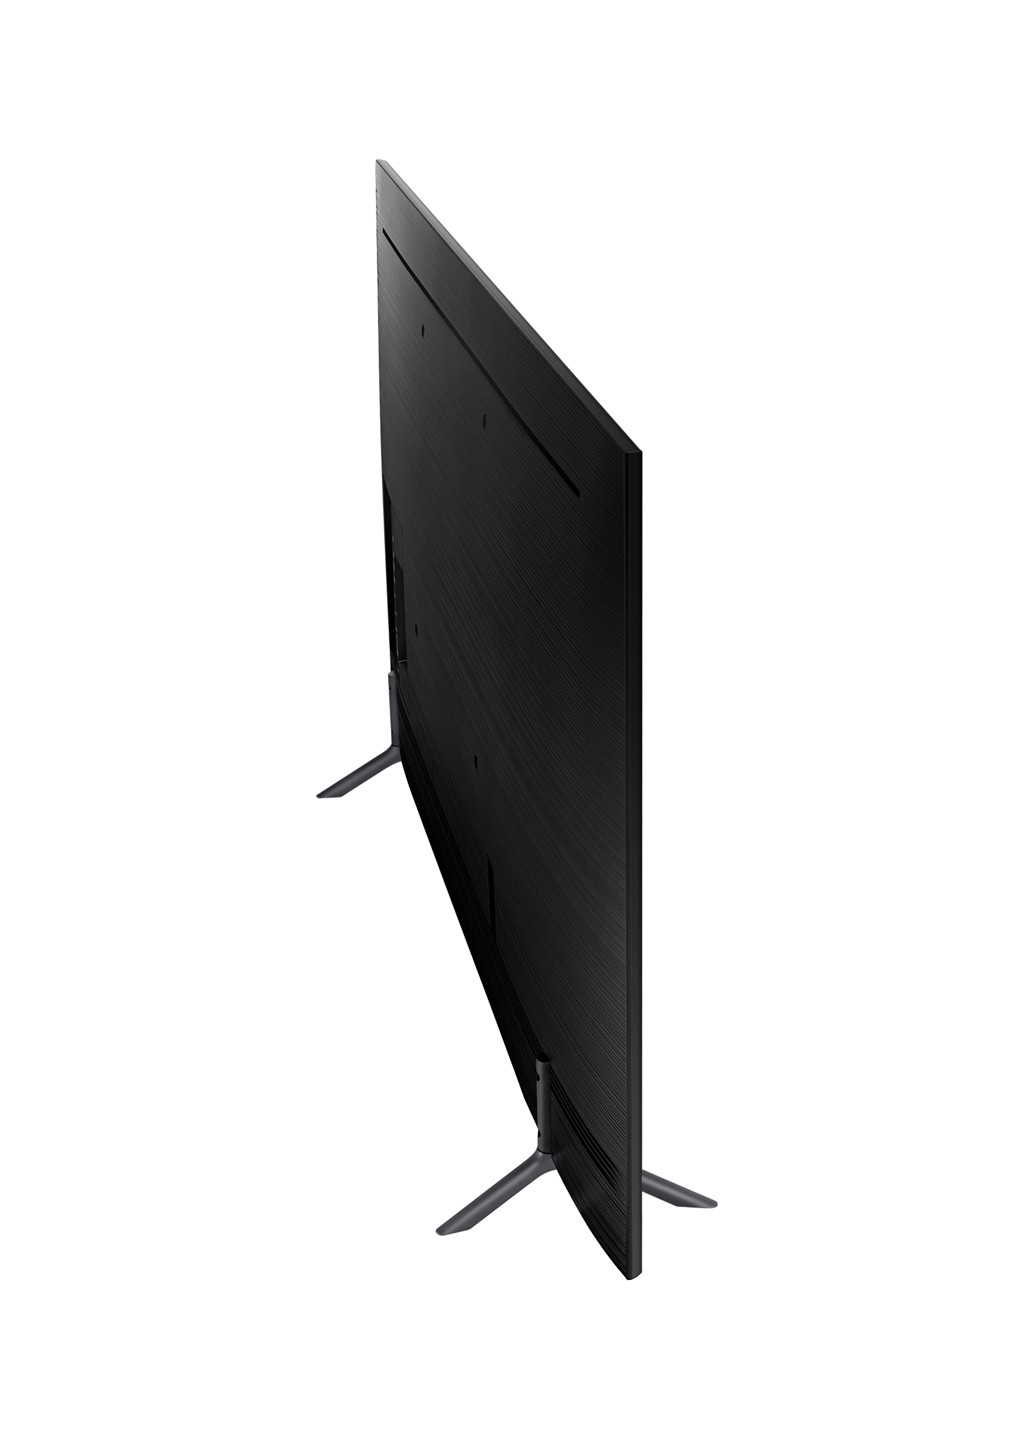 Телевизор Samsung ue58ru7100uxua (135527017)